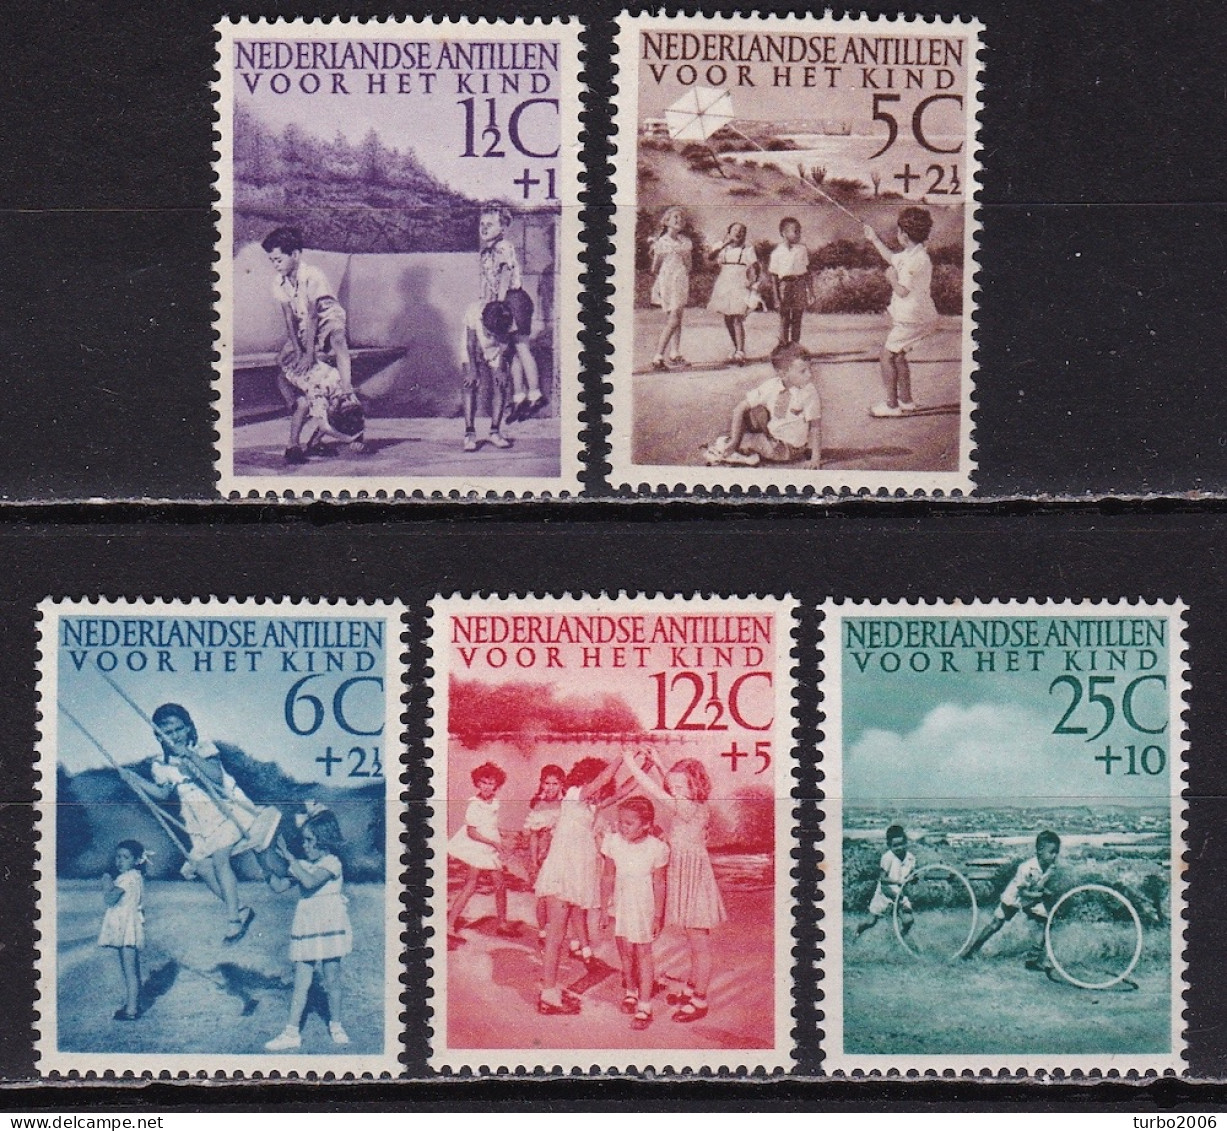 Ned. Antillen 1951 Kinderzegels Kinderspelen Complete Postfrisse Serie NVPH 234 / 238 - Curacao, Netherlands Antilles, Aruba